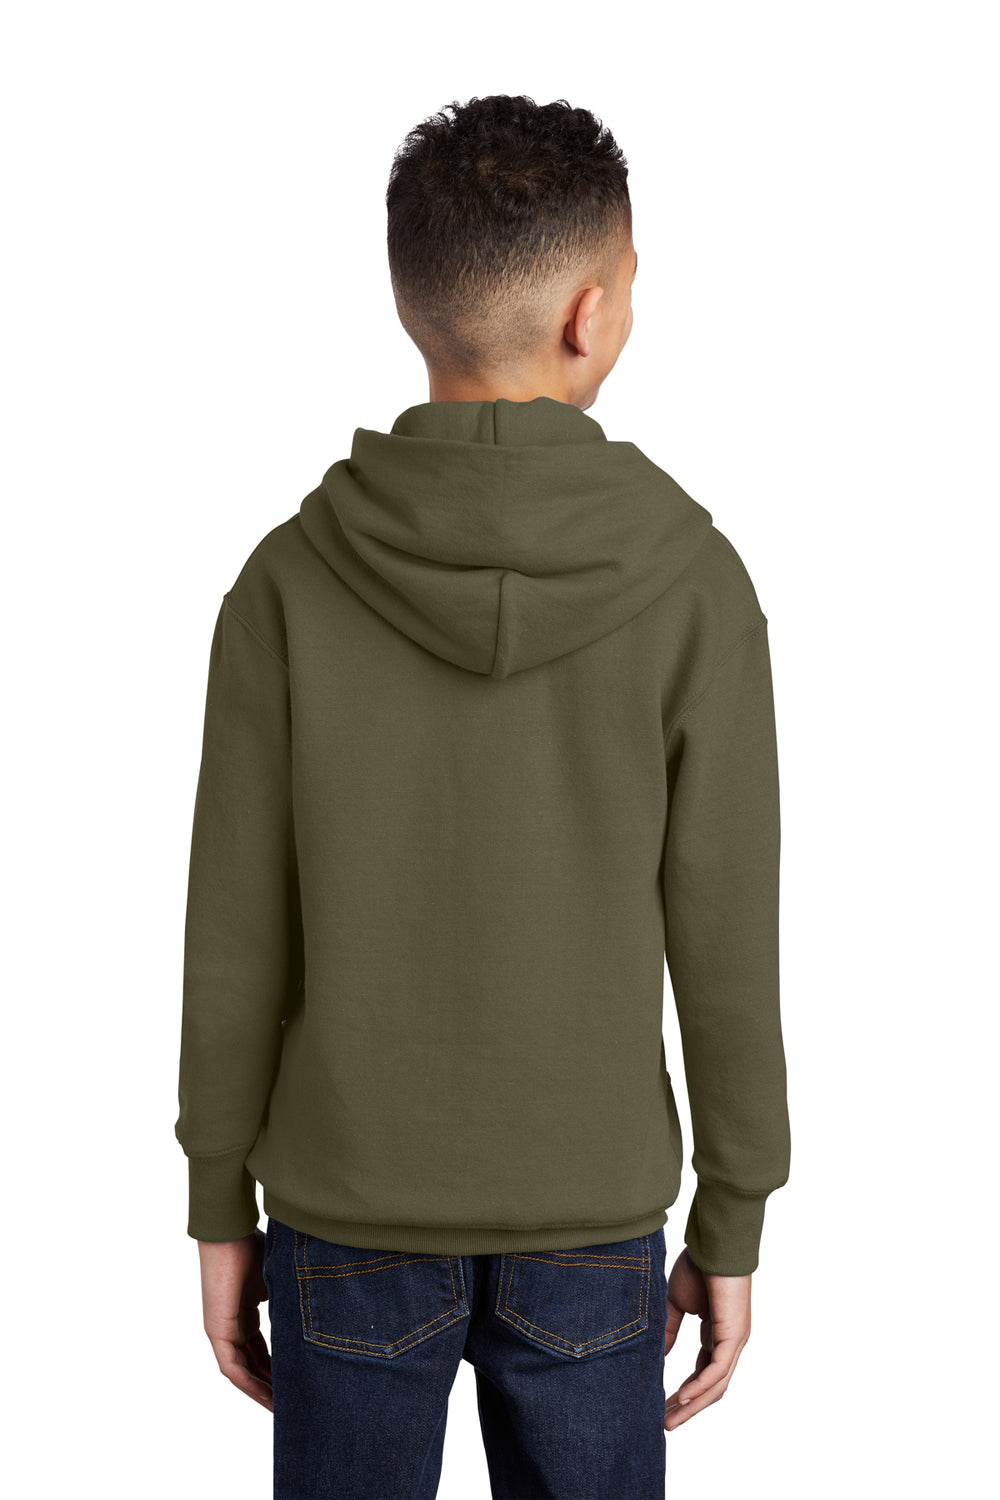 Port & Company PC90YH Youth Core Fleece Hooded Sweatshirt Hoodie Olive Drab Green Back